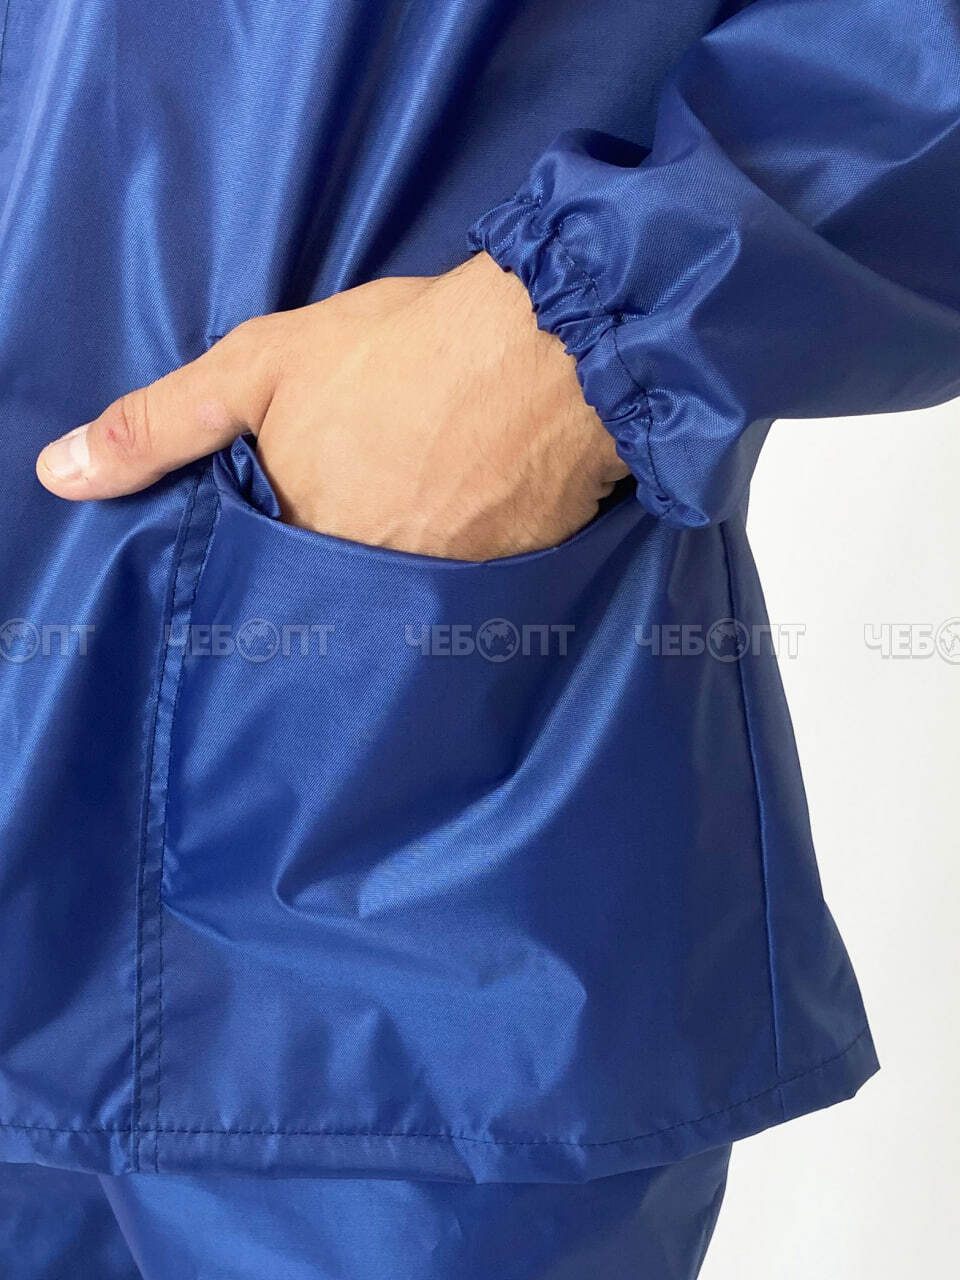 Костюм-дождевик (куртка, брюки),ЧЕБПРО,размер 48-50,100% полиэстер, Арт. ДожКостМуж/синий, МПС [15] СобПр. ЧЕБОПТ.